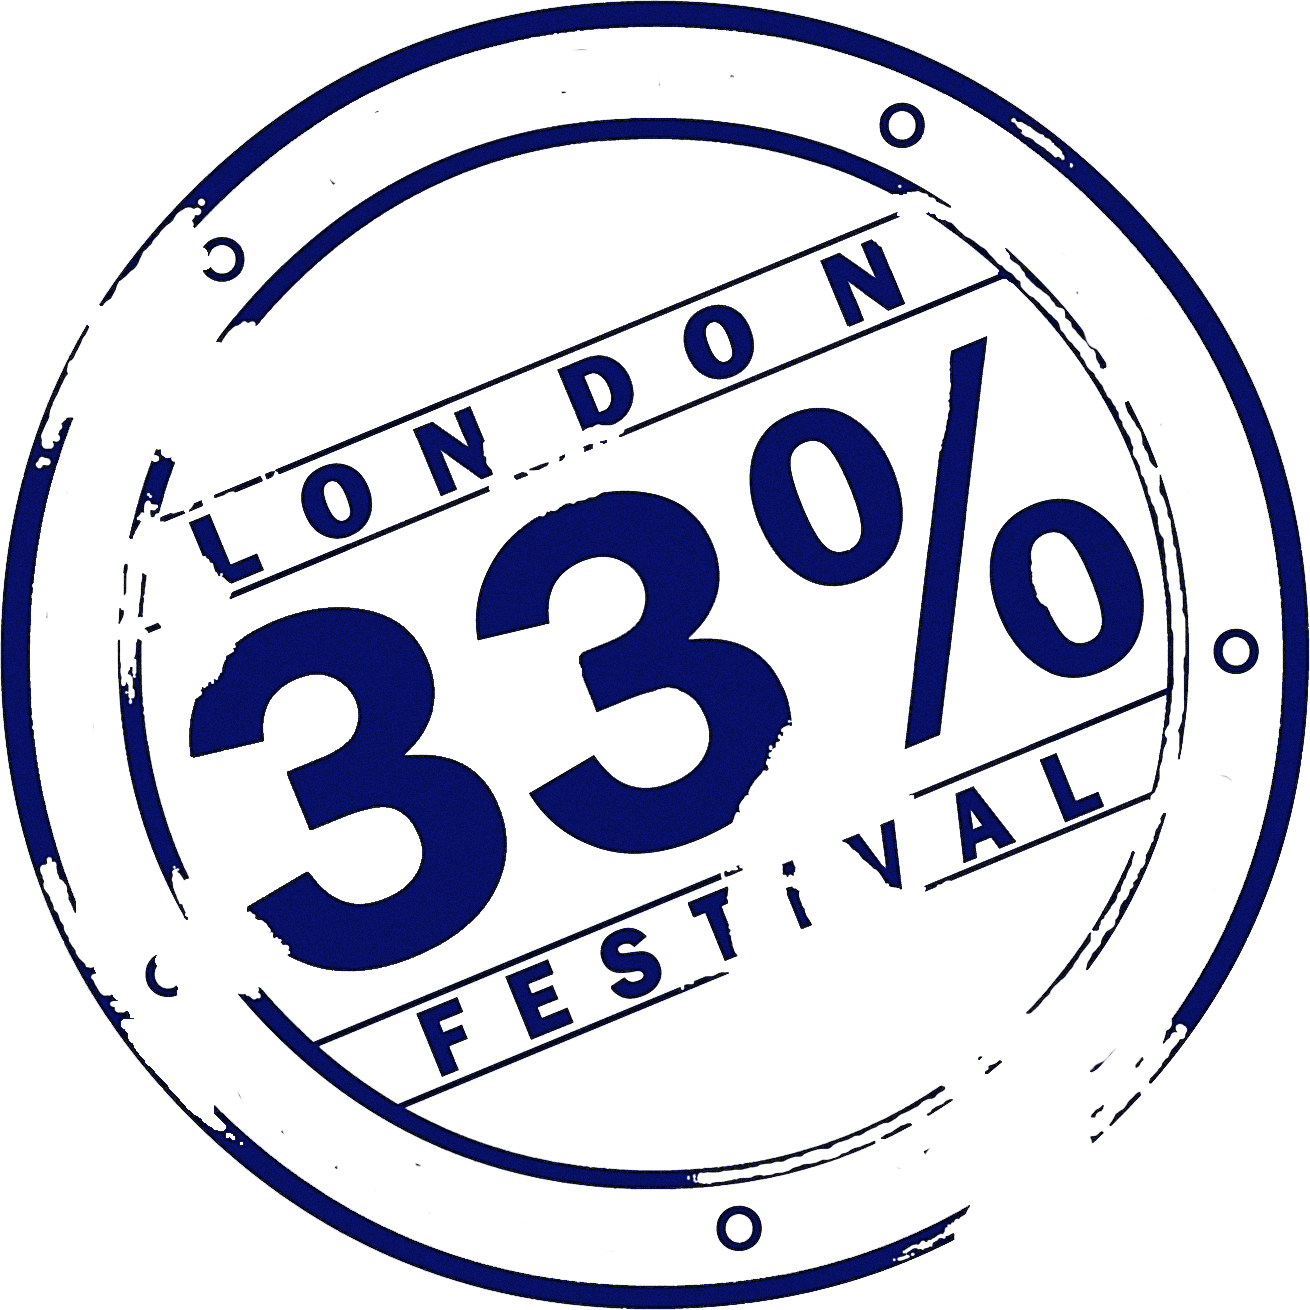 33-london-logo.jpg